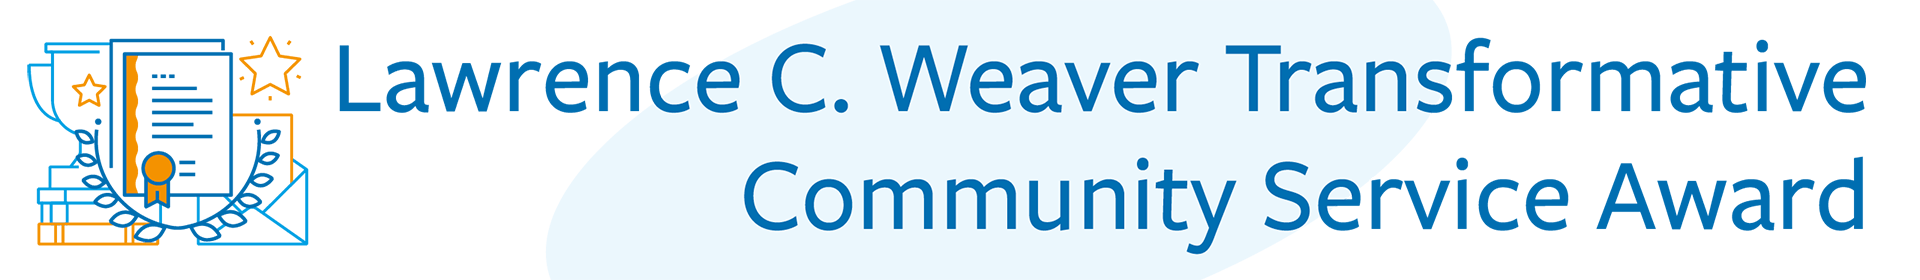 Lawrence C. Weaver Transformative Community Service Award Event Banner